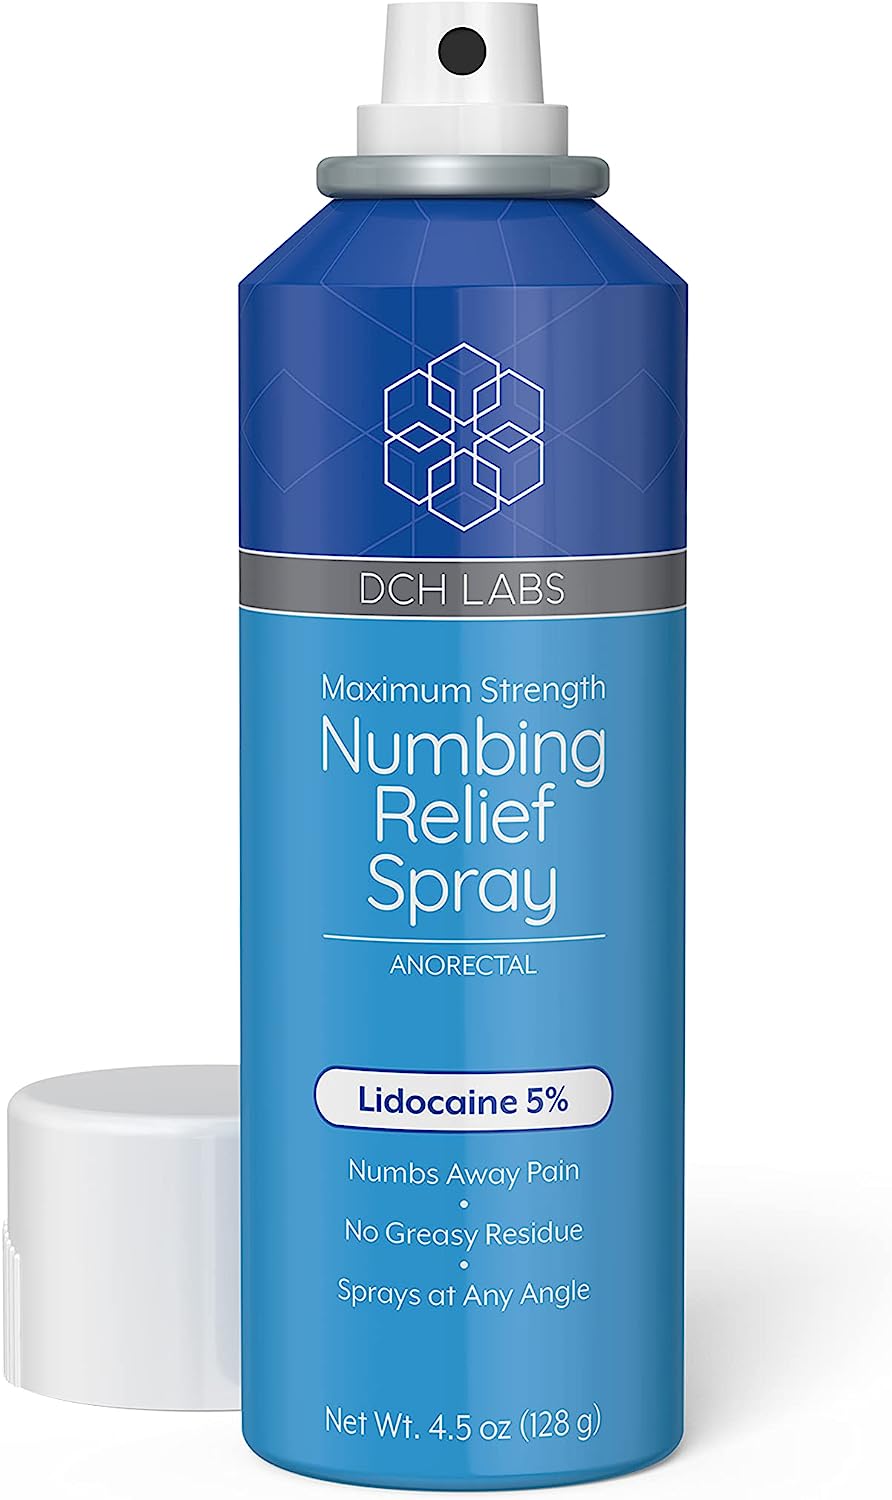 DCH Labs 5% Lidocaine Numbing Spray Maximum Strength [...]